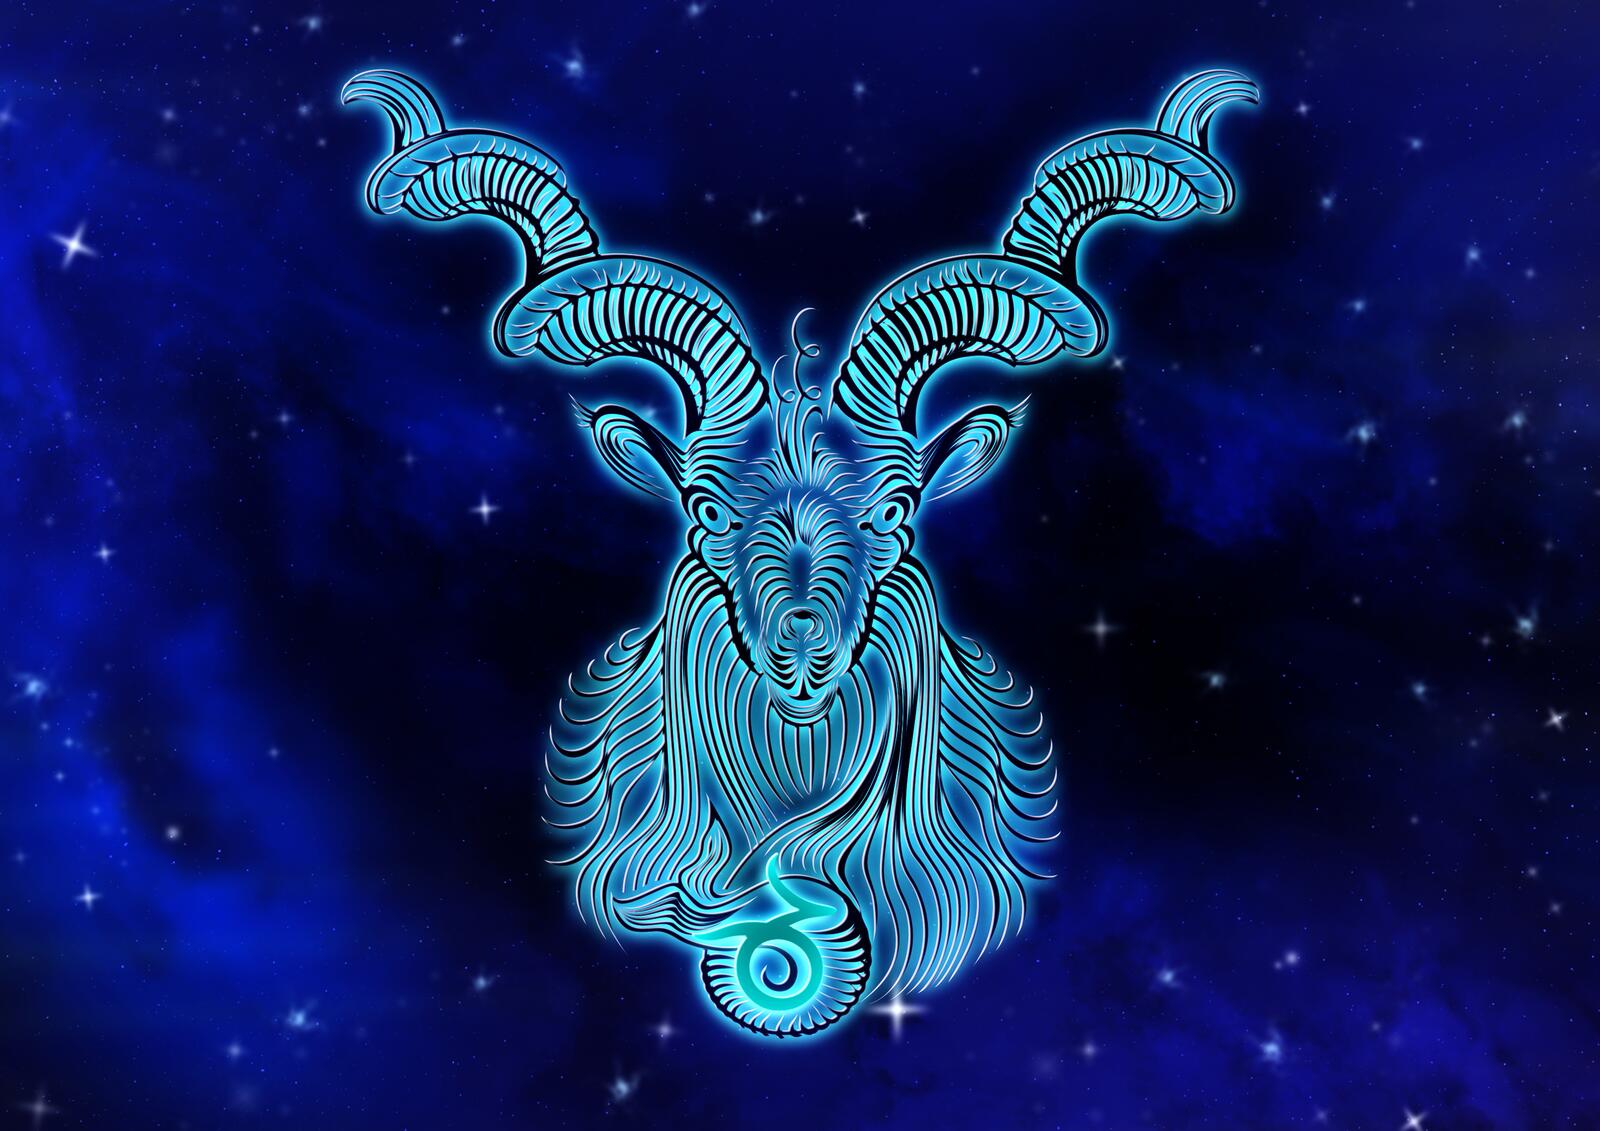 Wallpapers Capricorn zodiac sign horoscope on the desktop